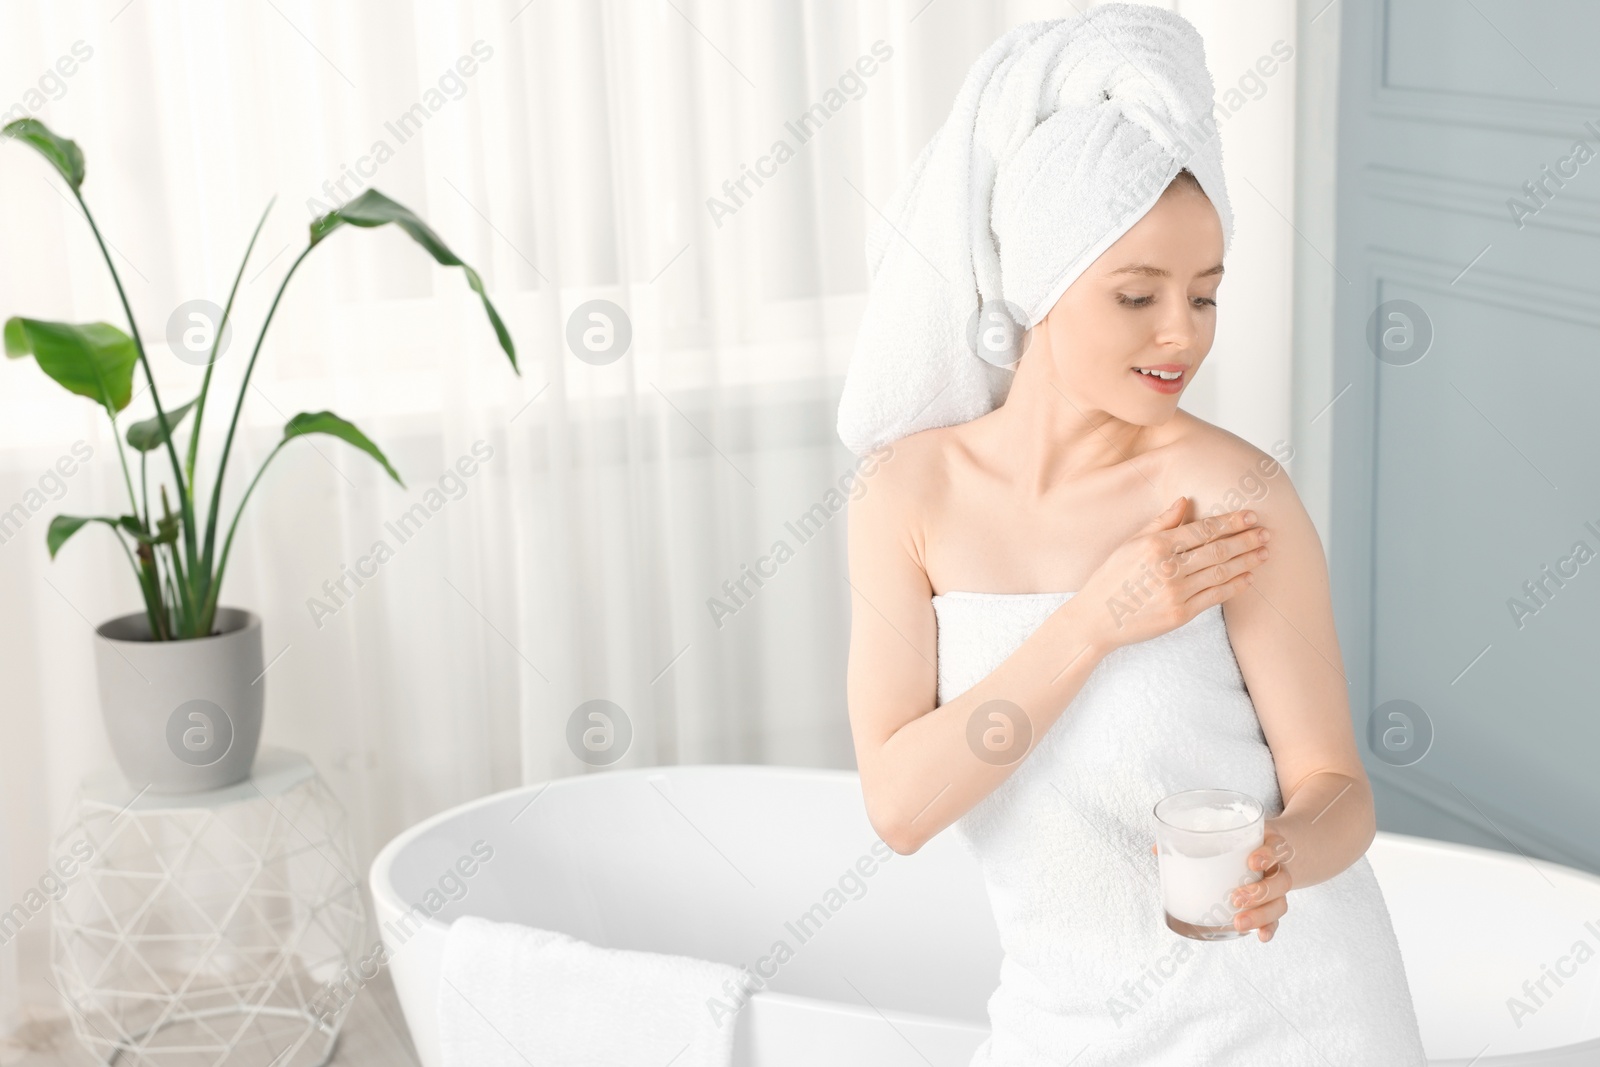 Photo of Beautiful young woman applying body cream onto shoulder in bathroom